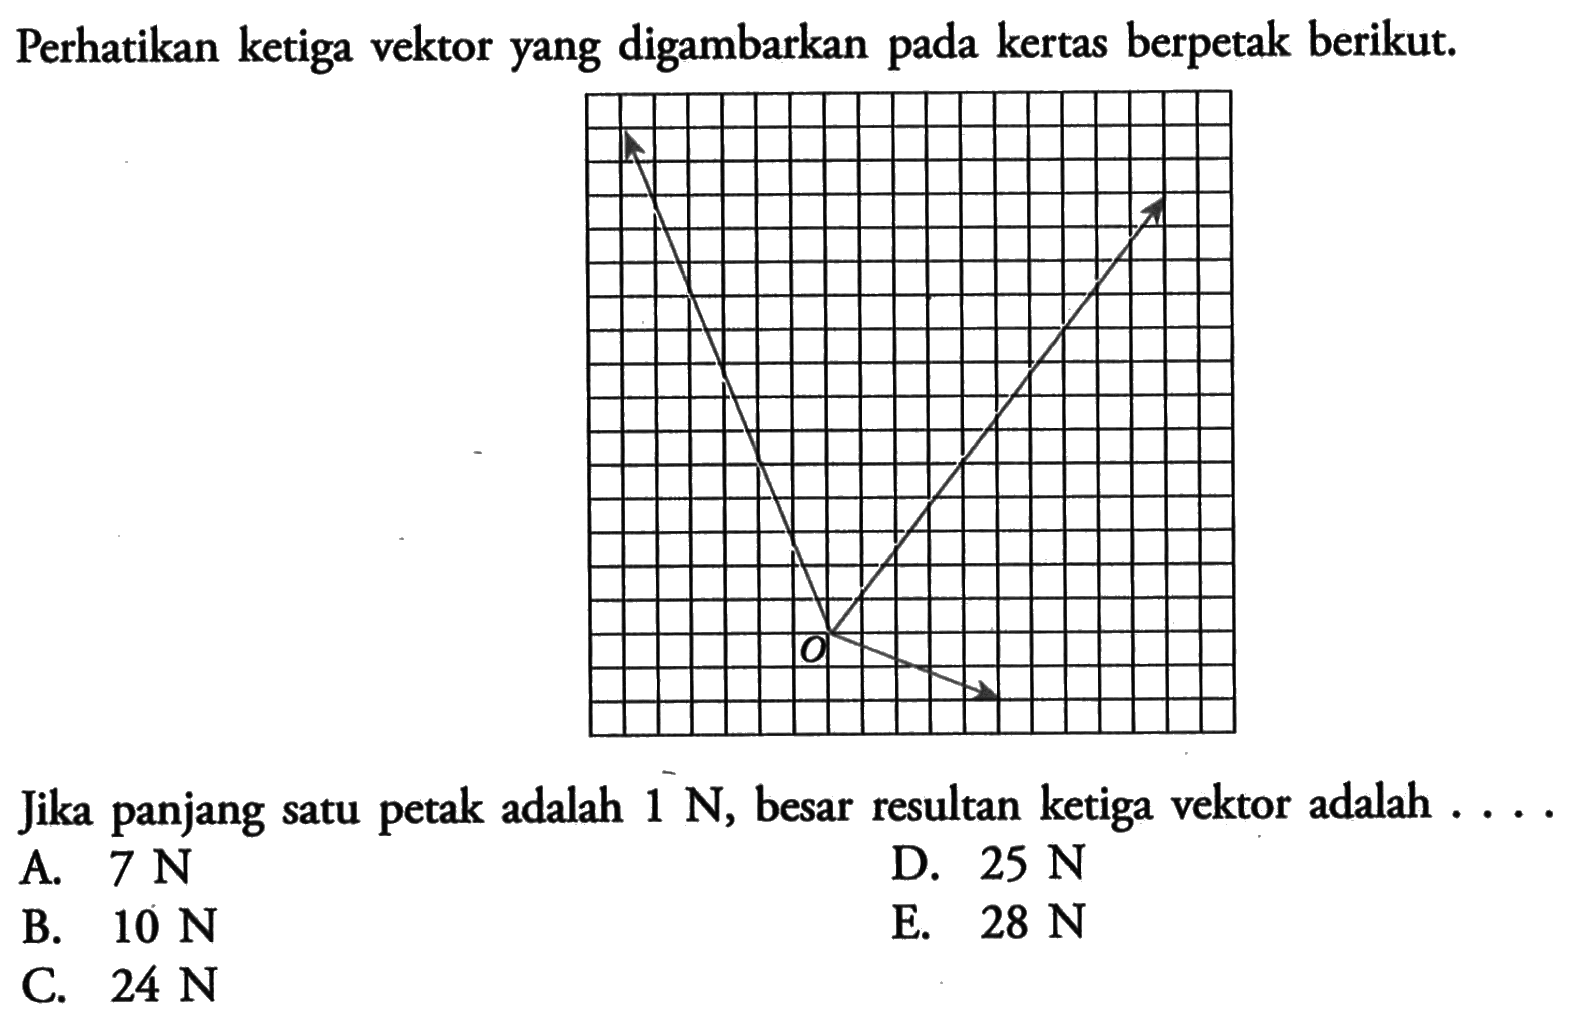 Perhatikan ketiga vektor yang digambarkan pada kertas berpetak berikut.Jika panjang satu petak adalah  1 N, besar resultan ketiga vektor adalah  ... . 